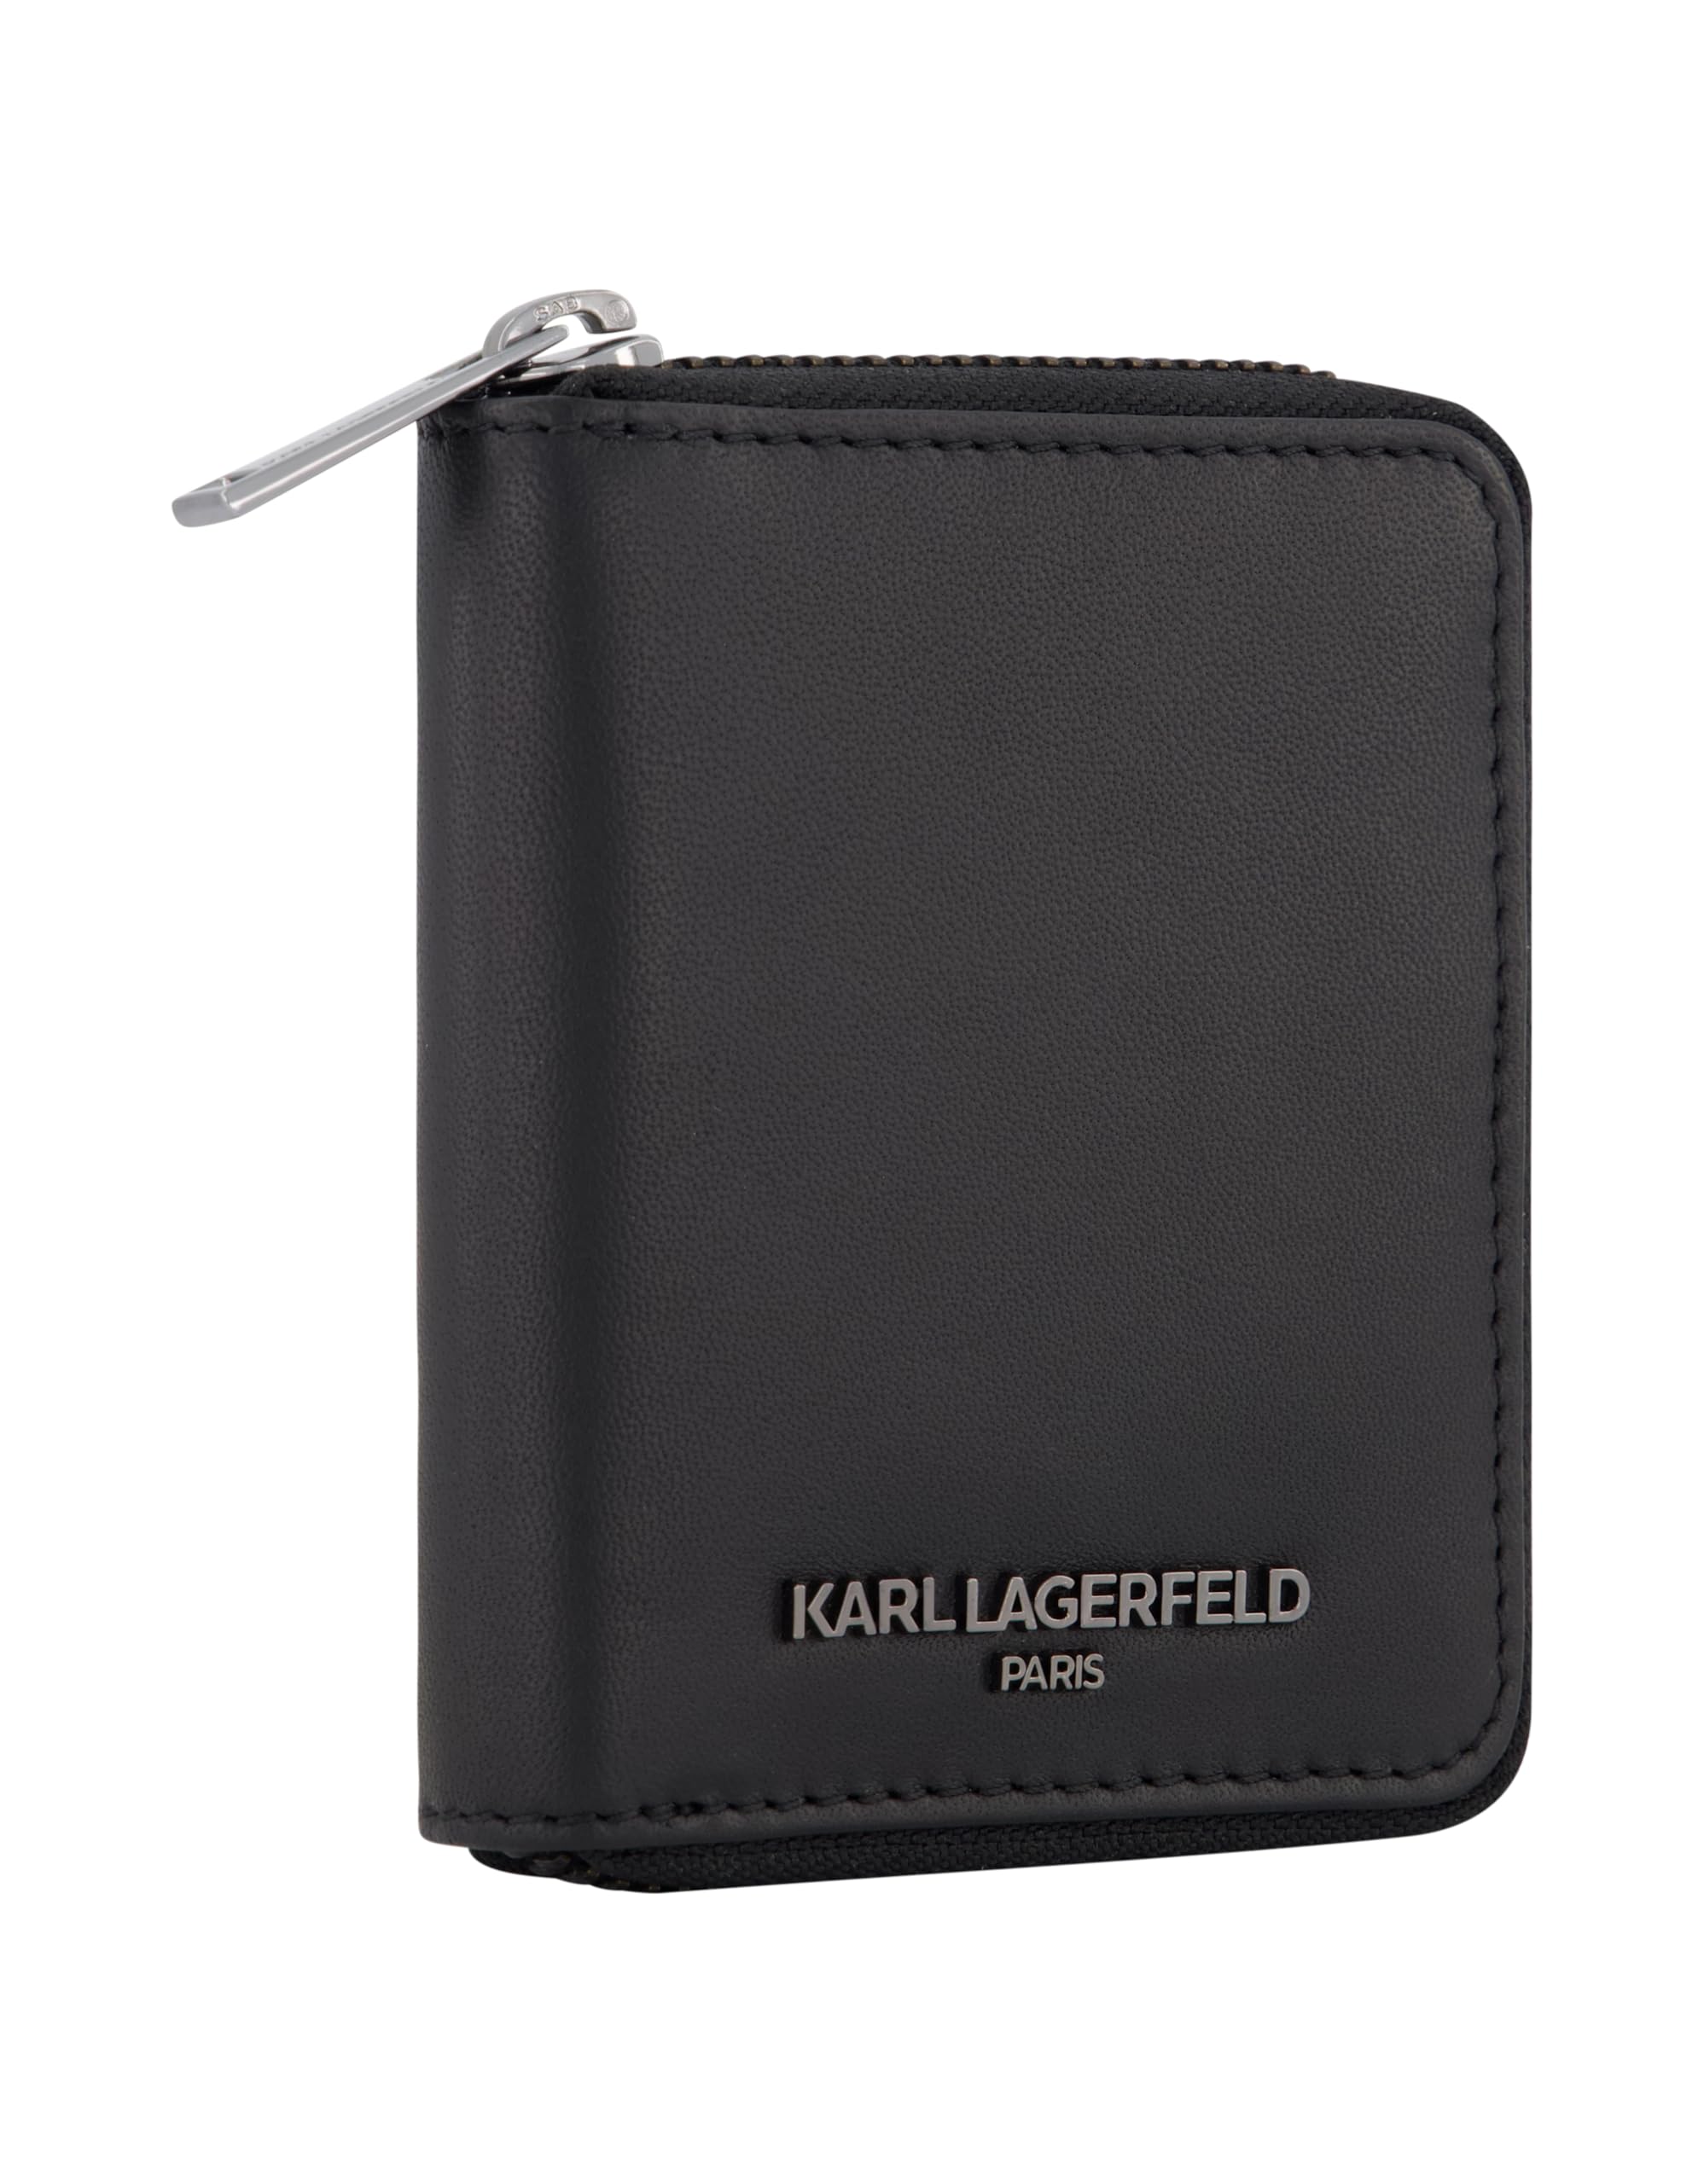 Karl Lagerfeld Paris Men's Nappa Grey Bubble Leather Iconic Logo on a Gunmetal Plate Zip Around Wallet, Black_logo3, One Size